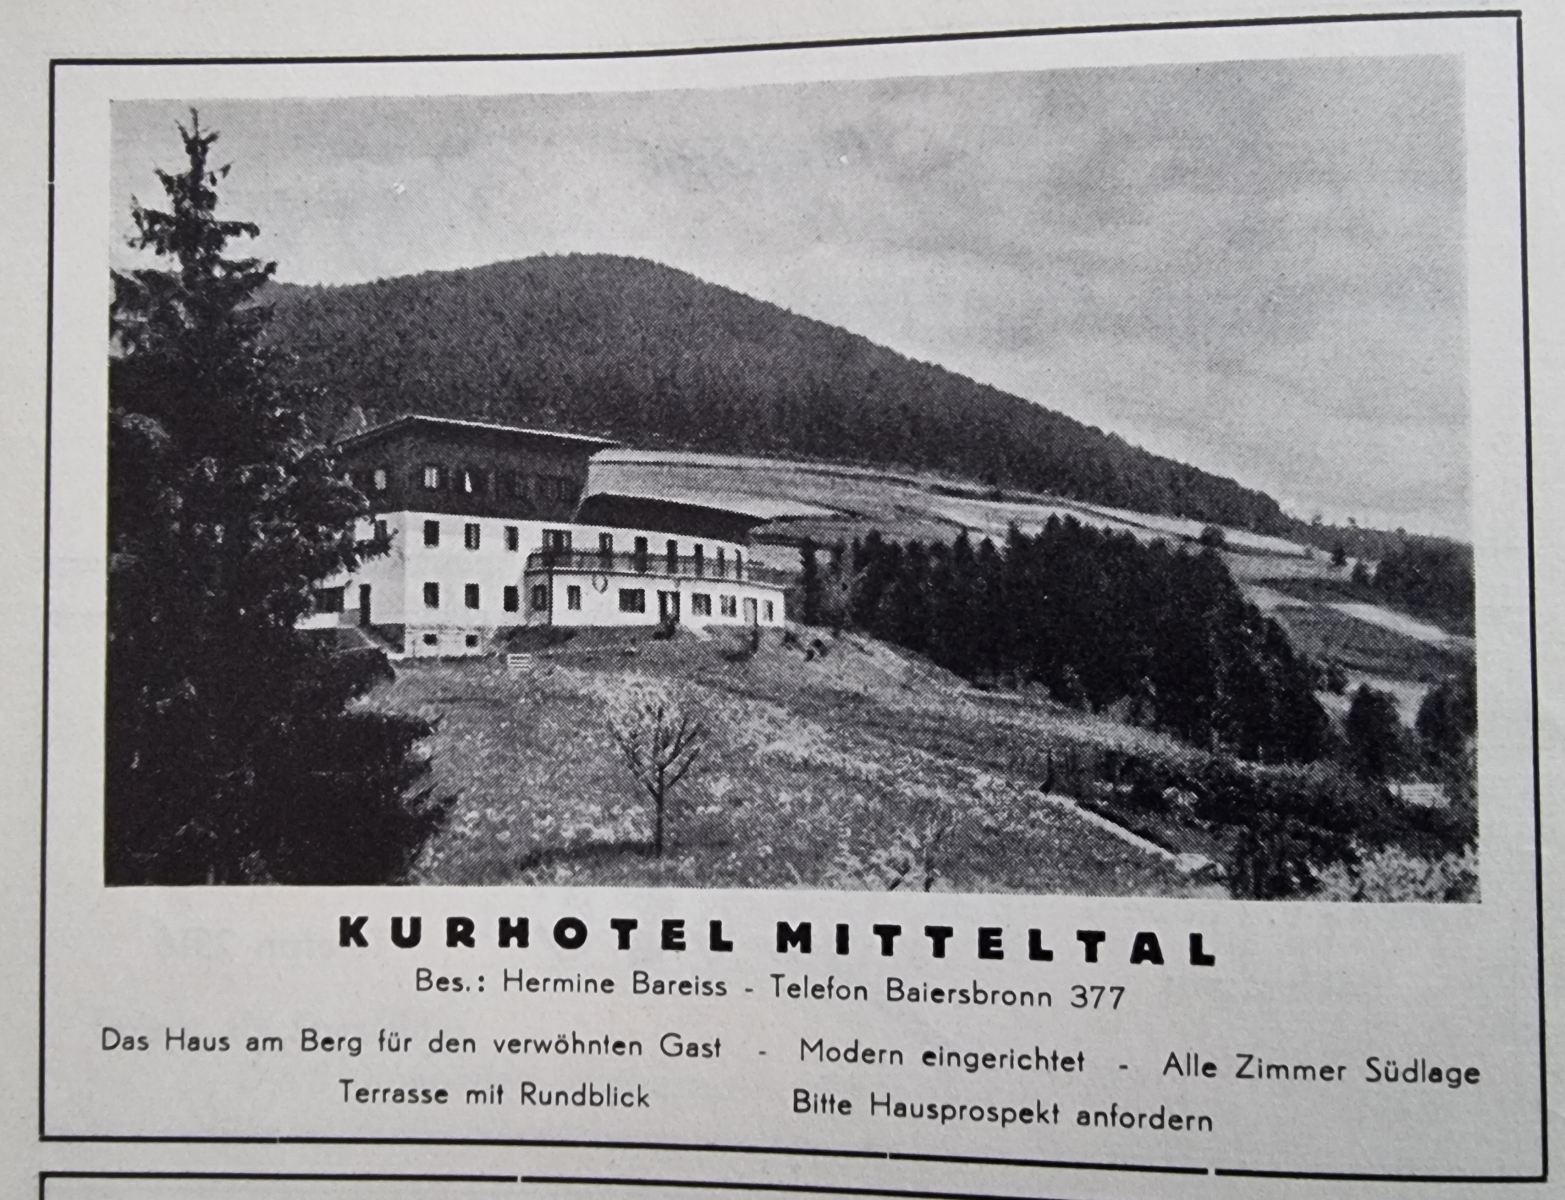 Kurhotel-Mitteltal